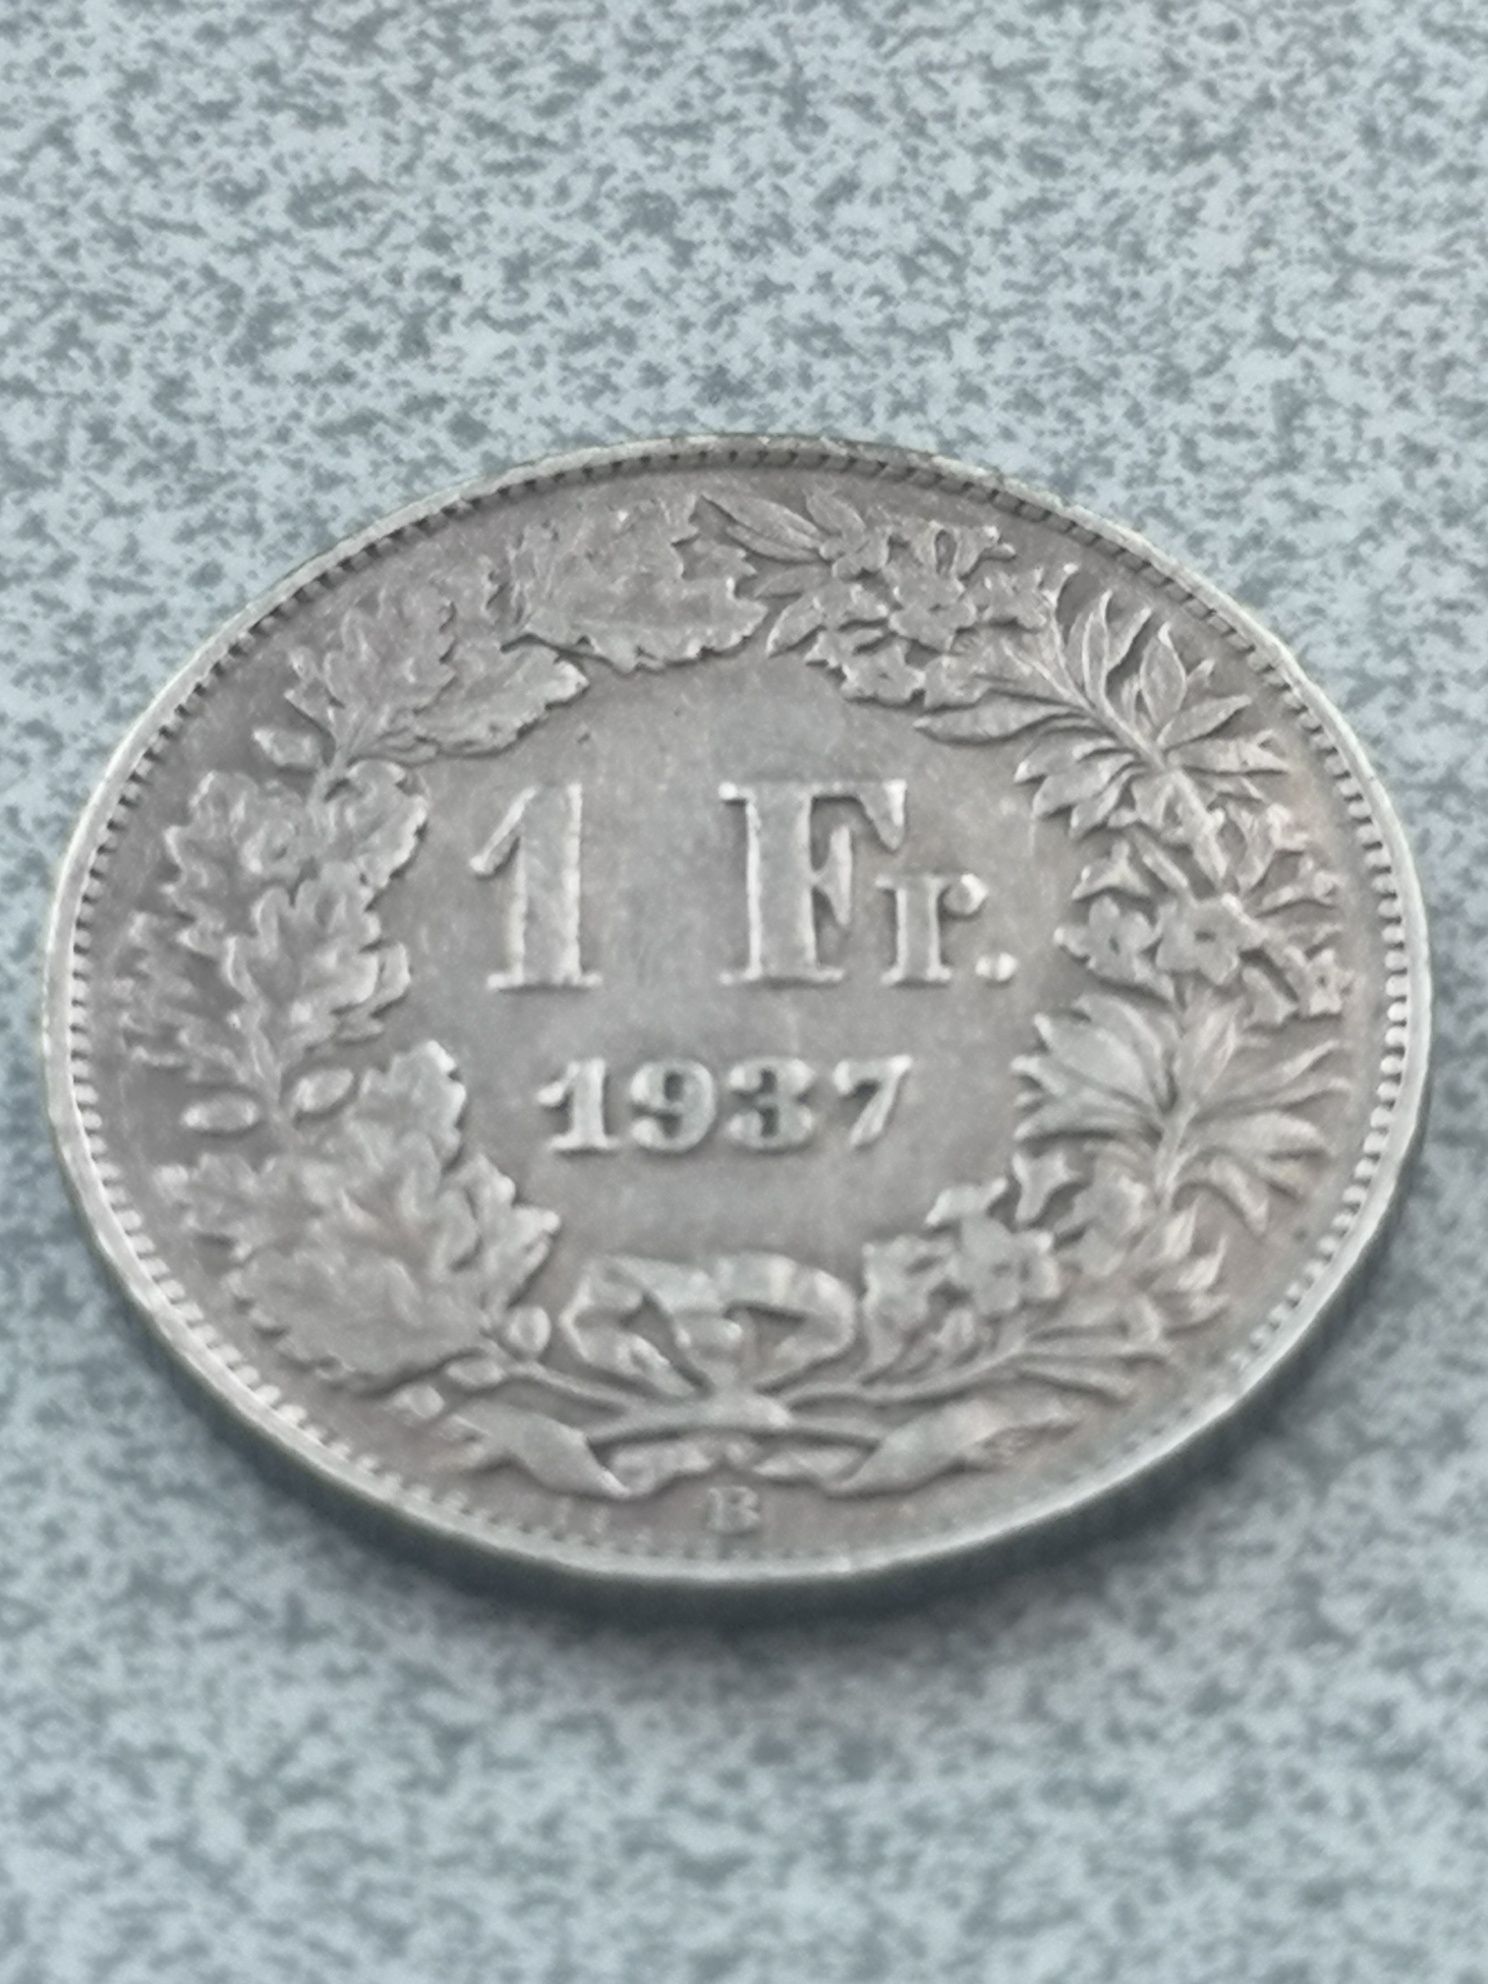 1 frank 1937r. Szwajcaria srebro Helvetia Ag